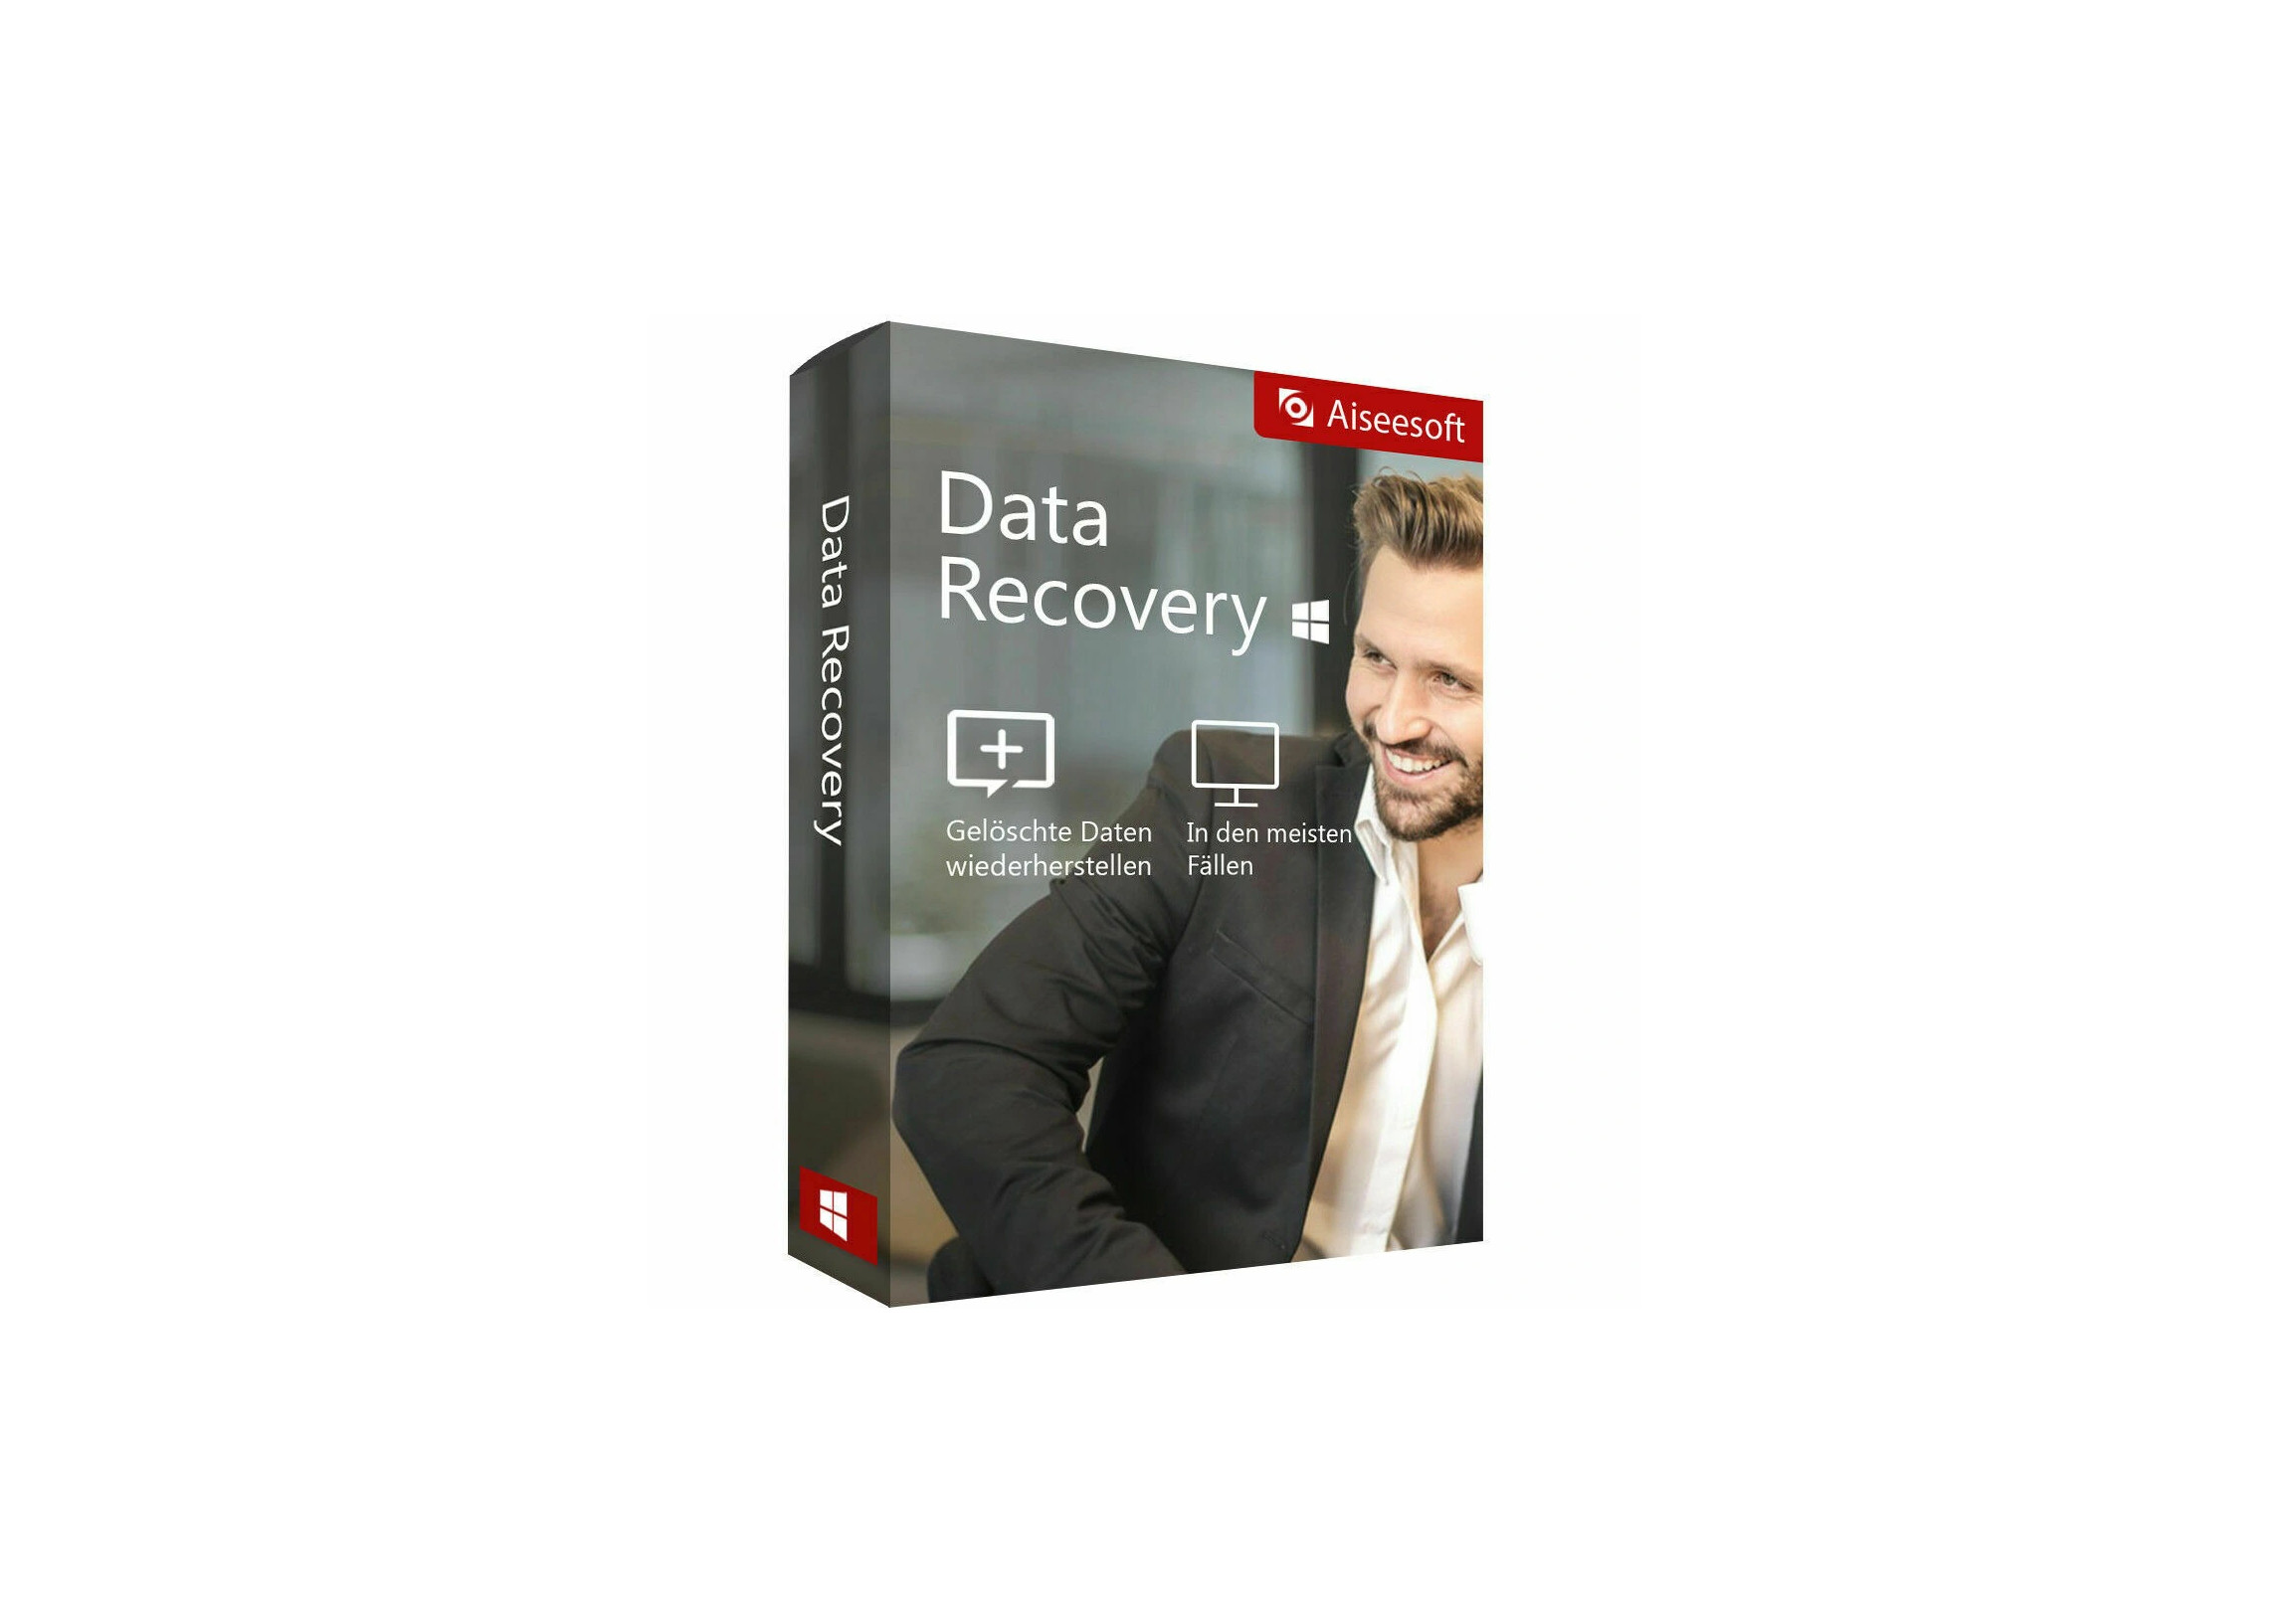 Aiseesoft Data Recovery Key (1 Year / 1 PC) (2.25$)